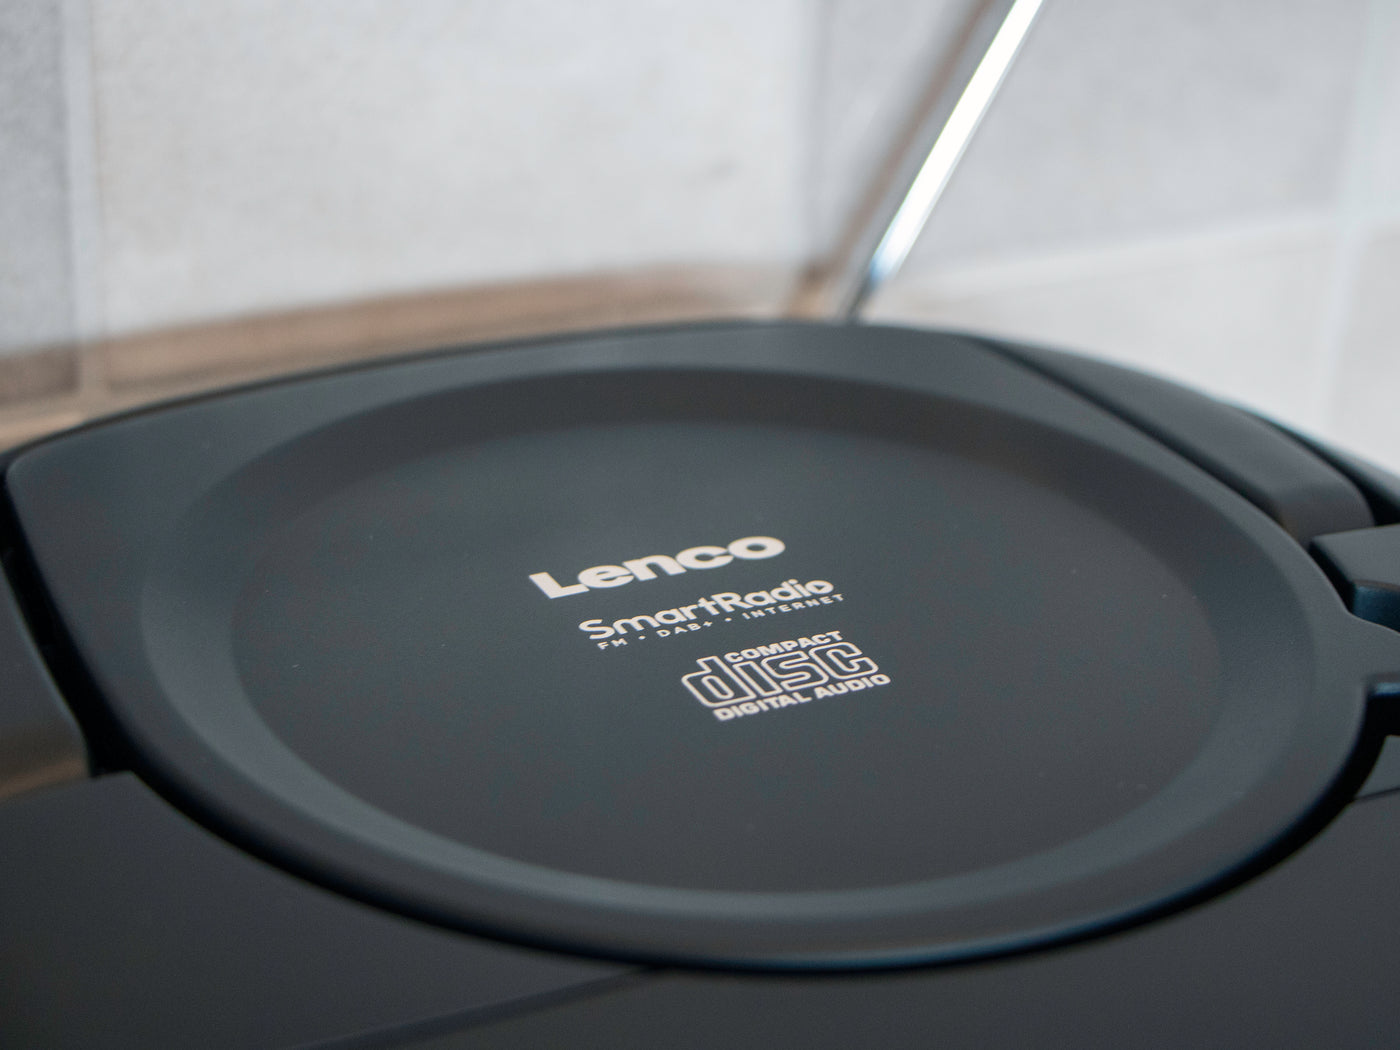 Lenco SCD-6000BK - Tragbares Internetradio mit DAB+/FM, Bluetooth®, CD-Player und großem LCD-Farbdisplay - Schwarz